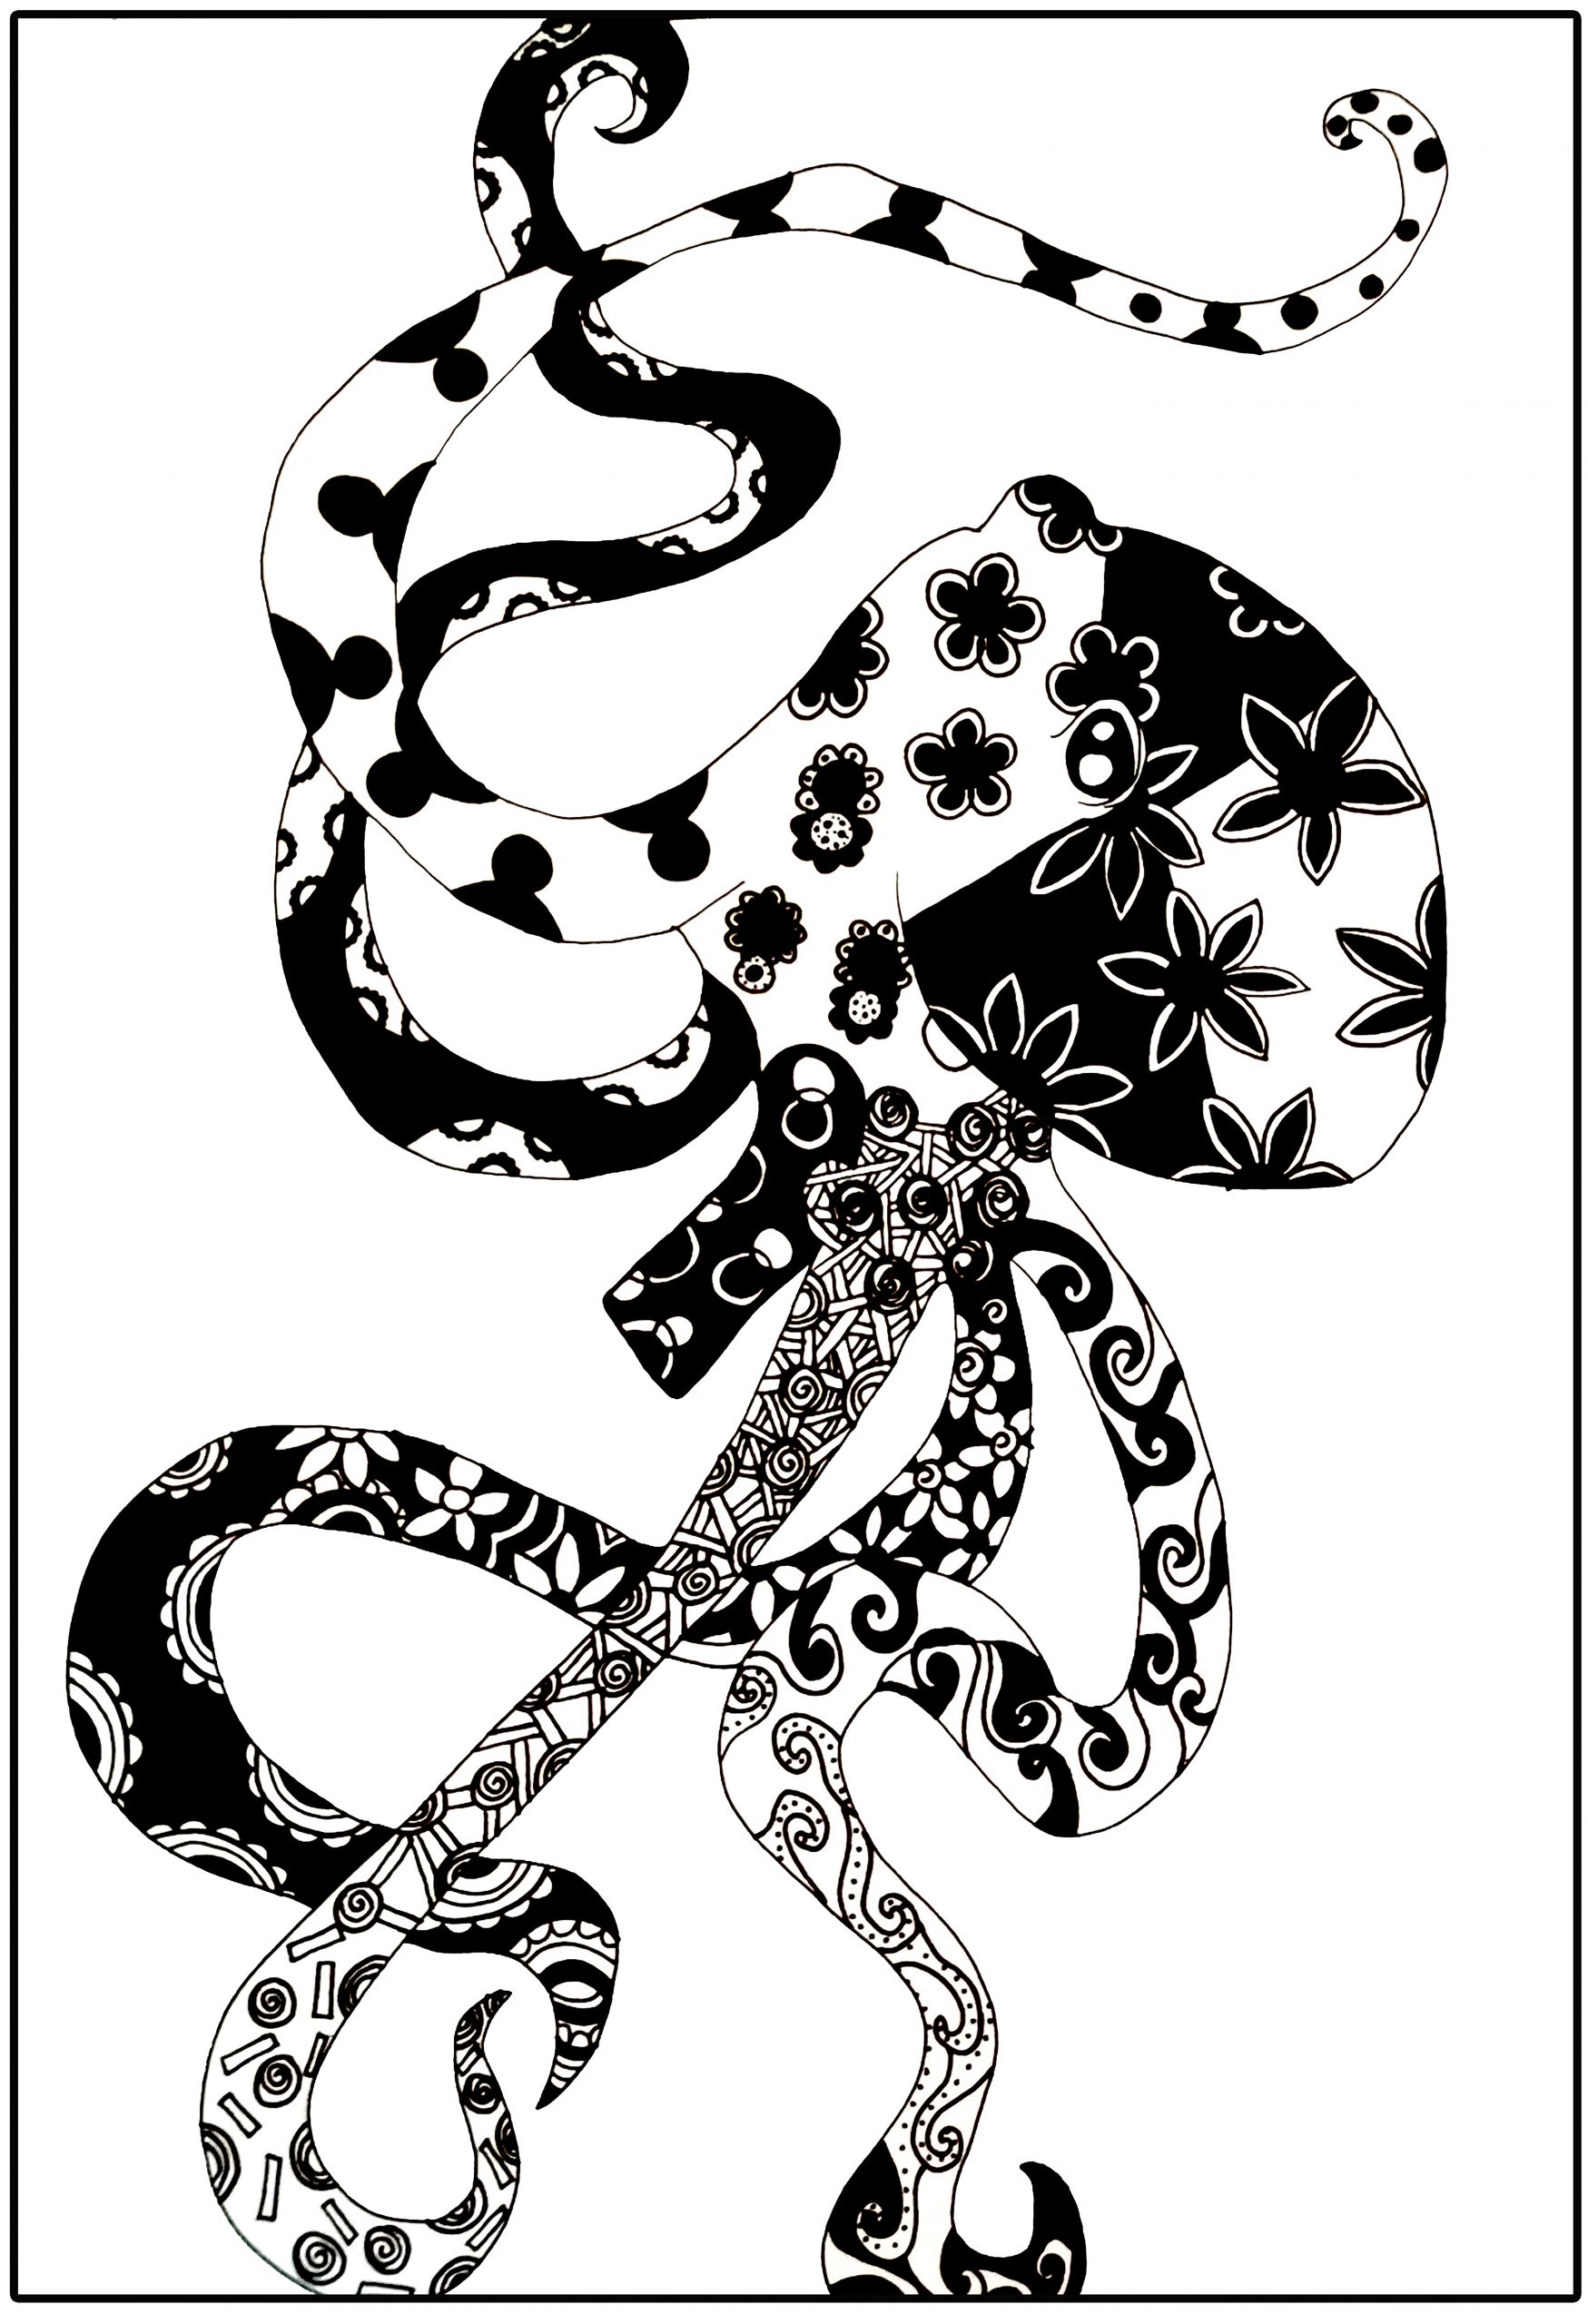 octopus artwork in digital format